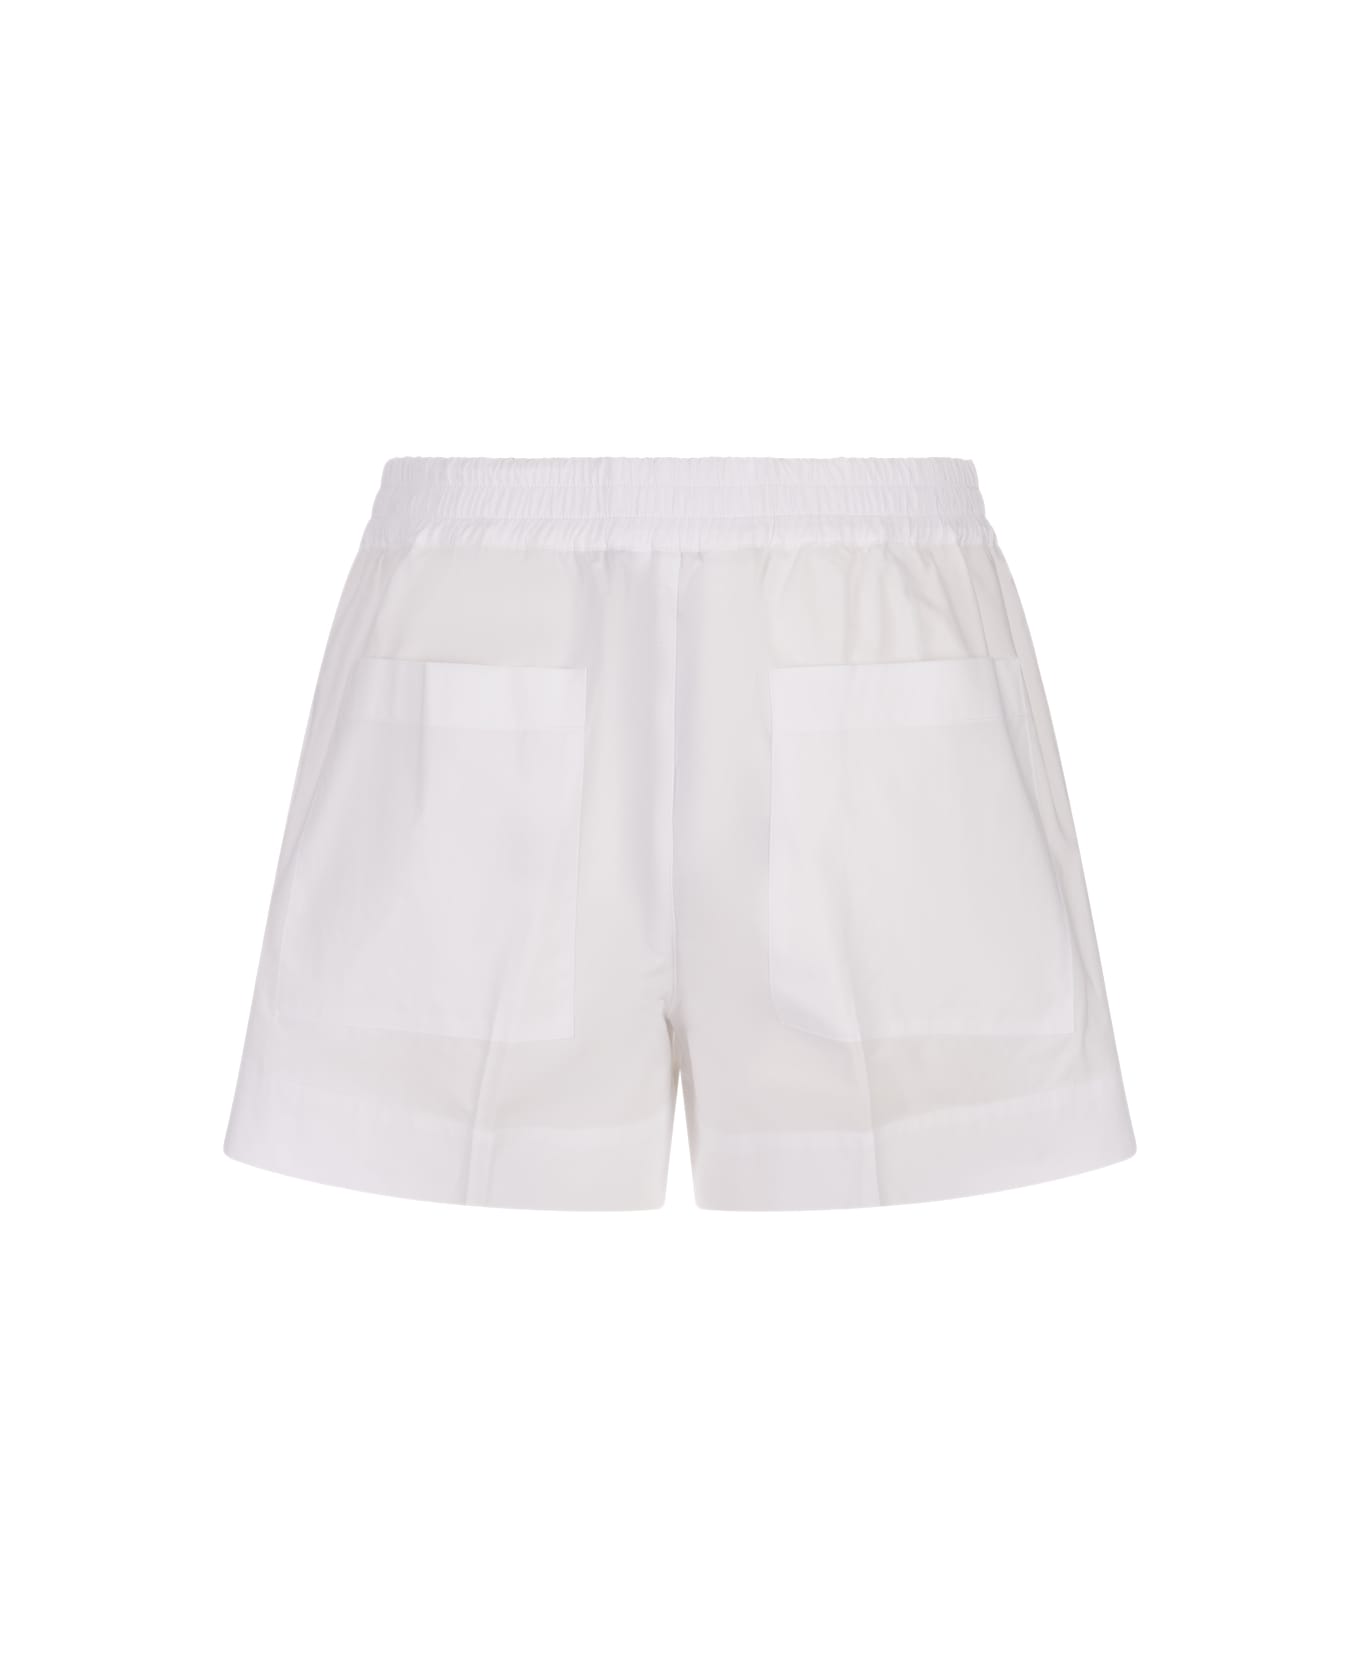 Parosh Canyox Shorts In White Cotton - White